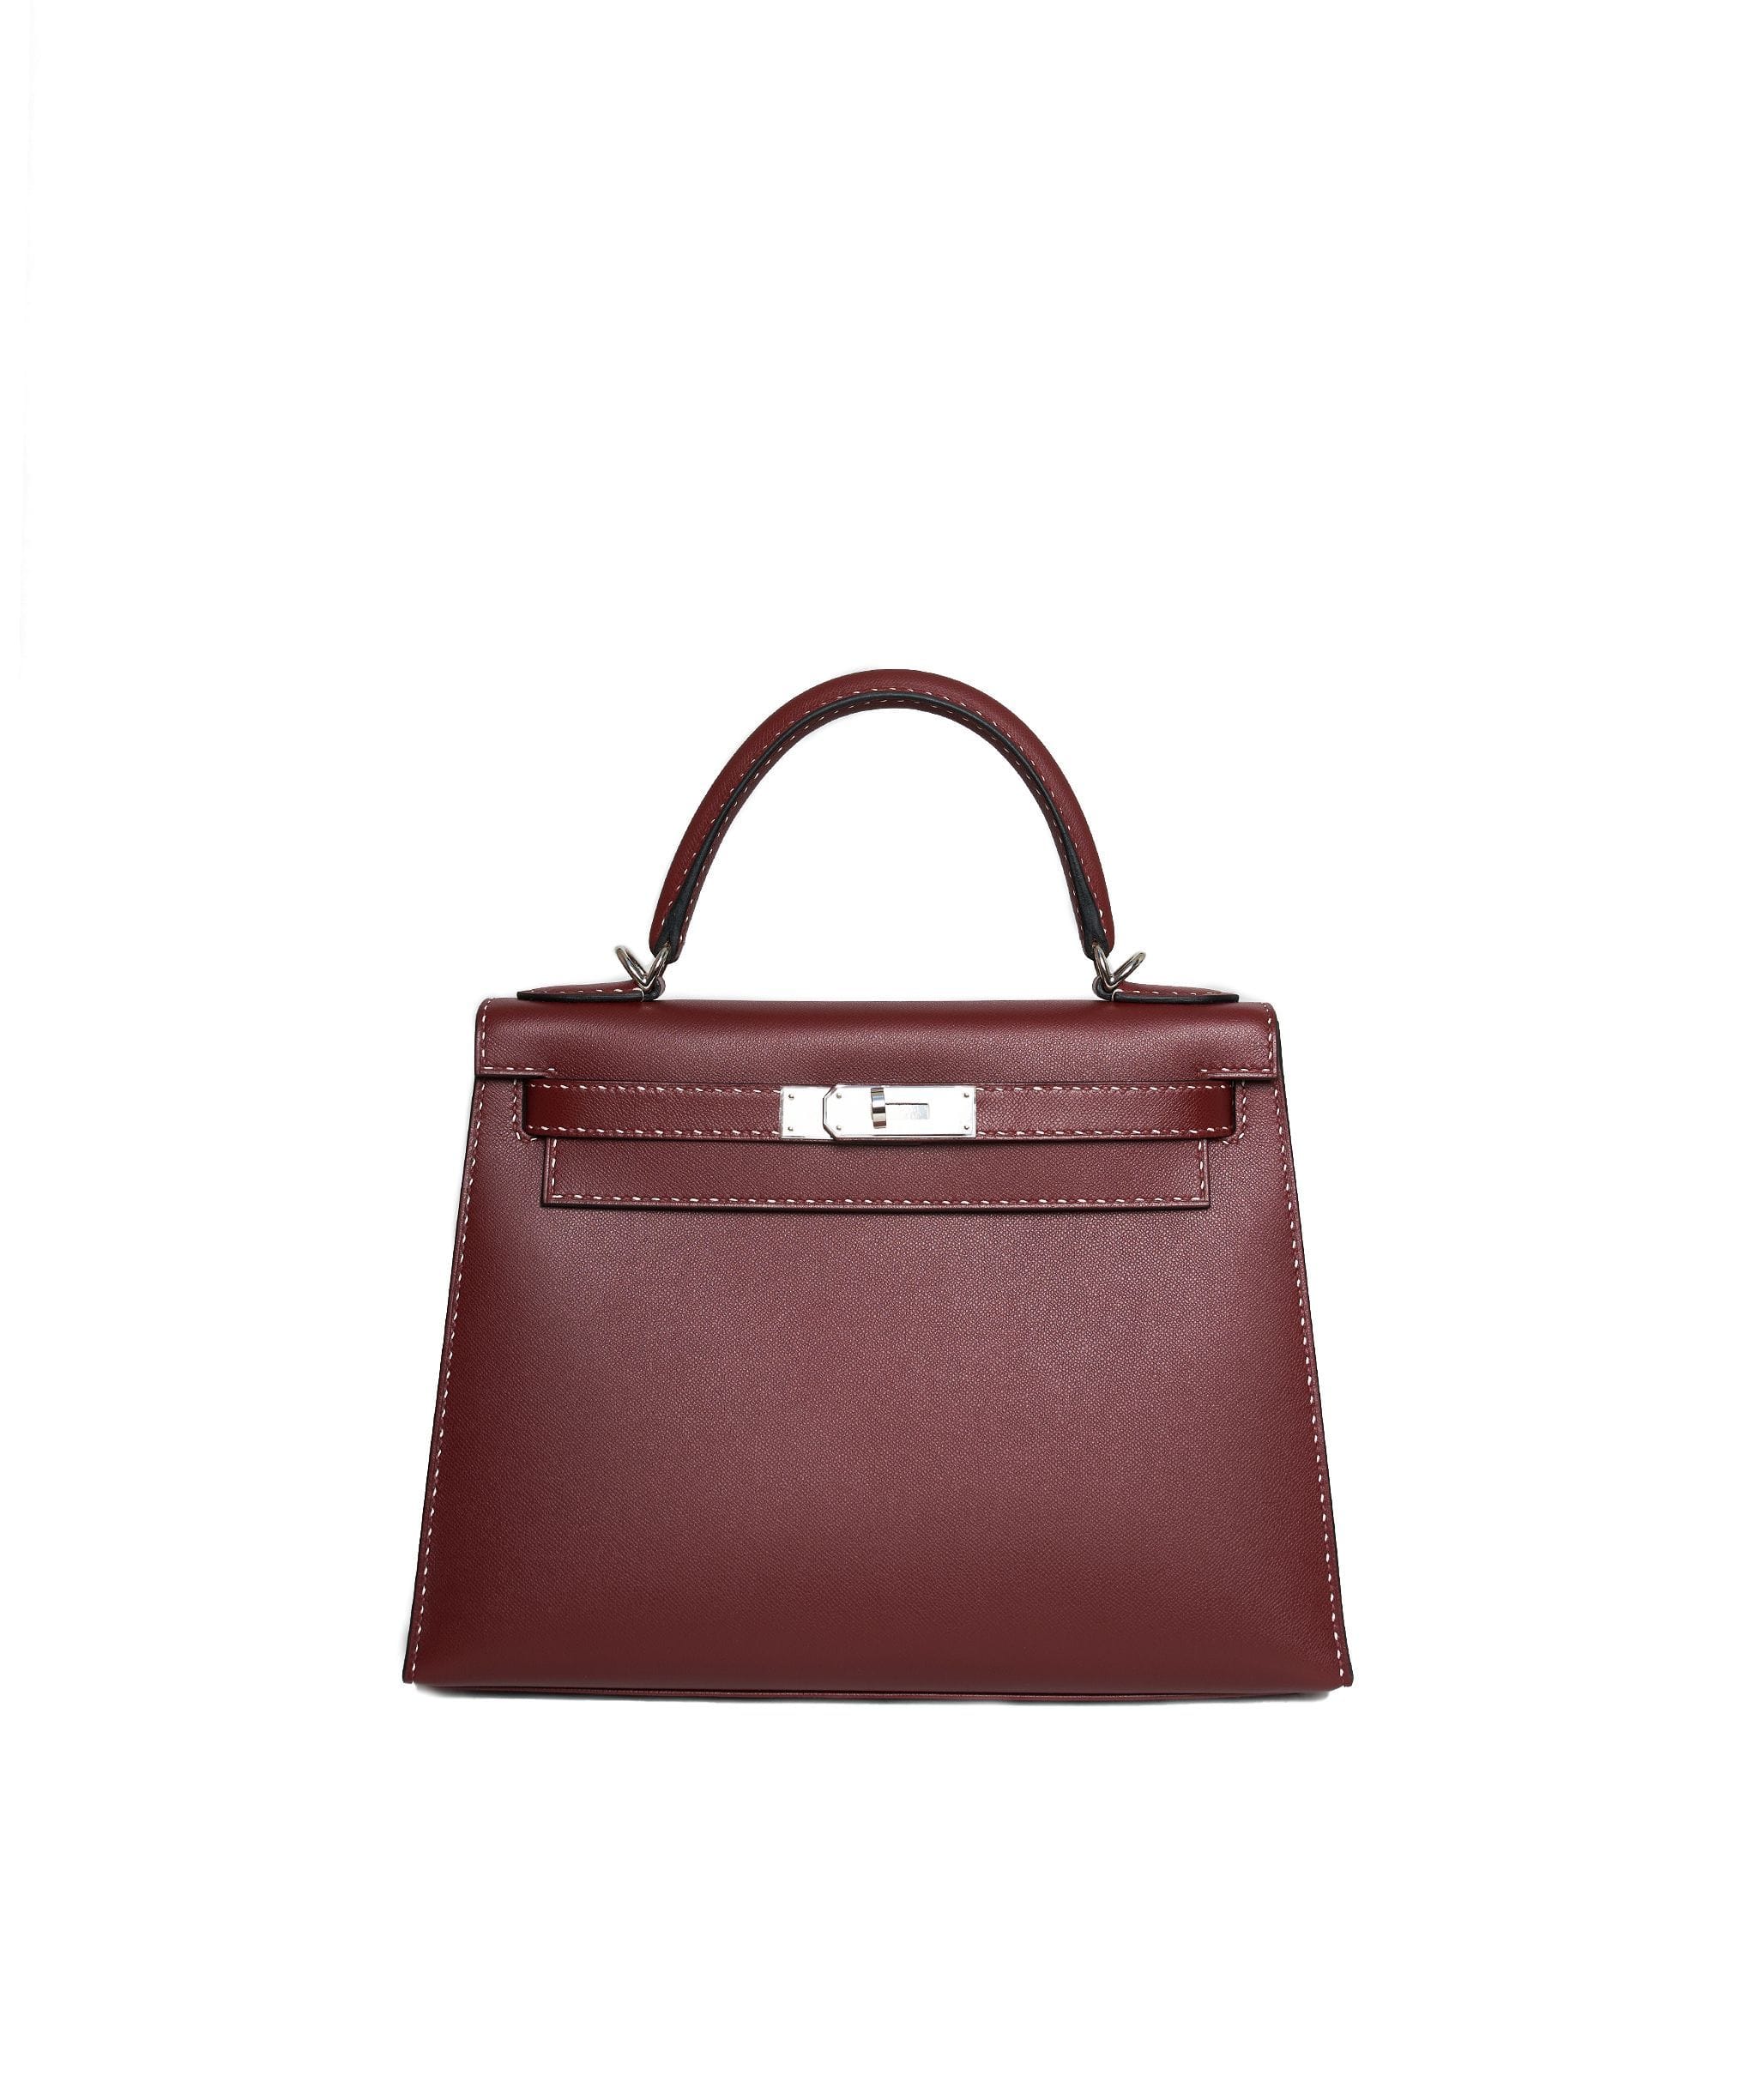 Hermès Kelly Handbag 280020